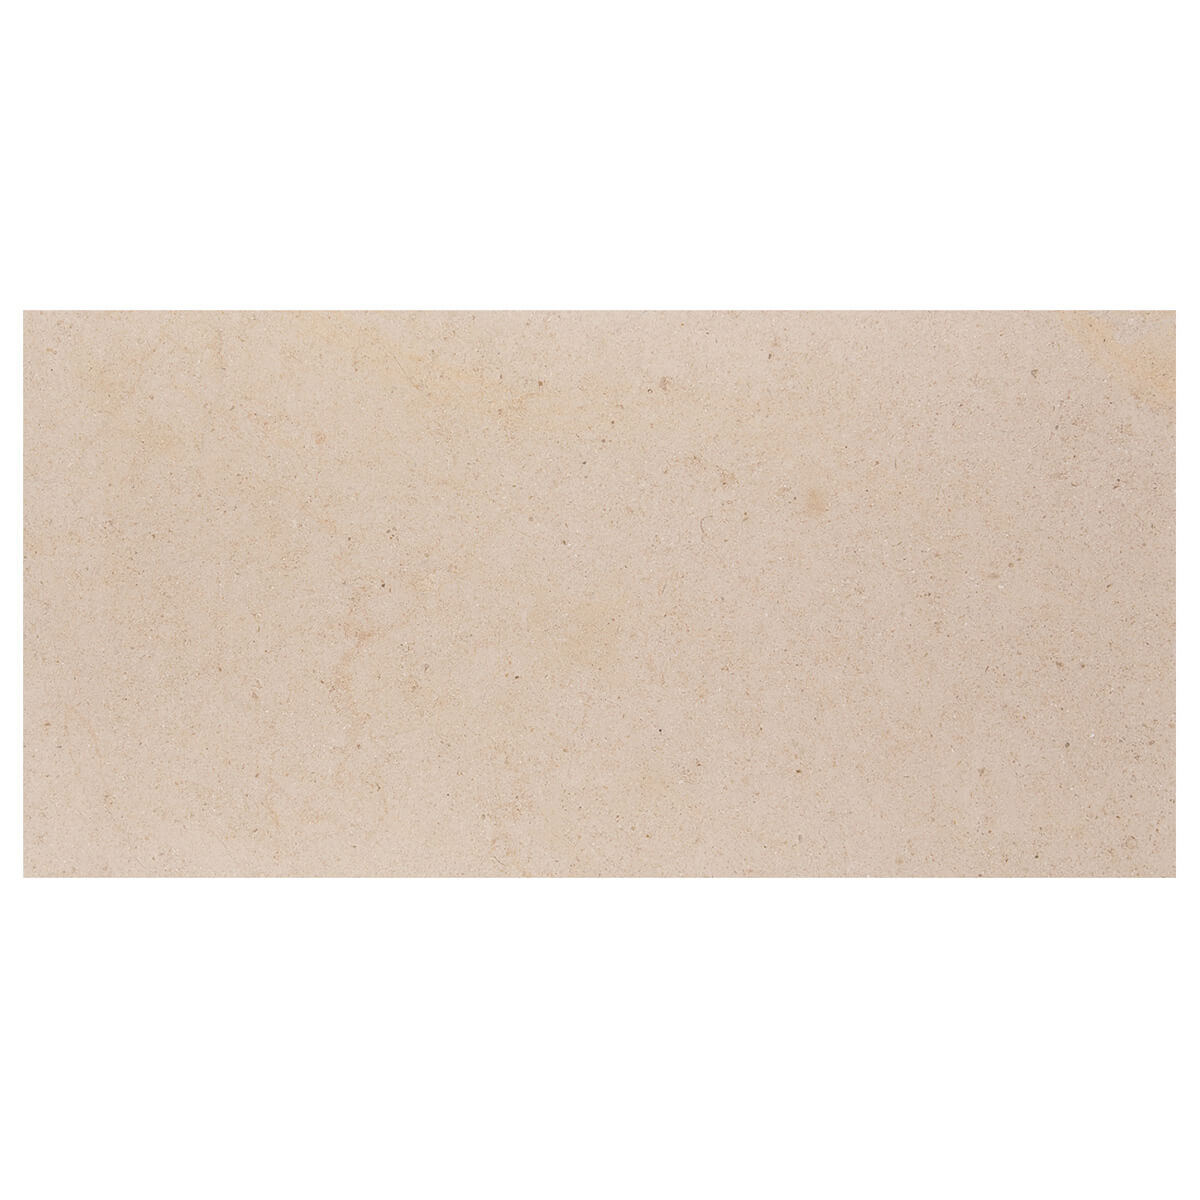 haussmann fonjone gascogne beige limestone rectangle natural stone field tile 12x24 honed